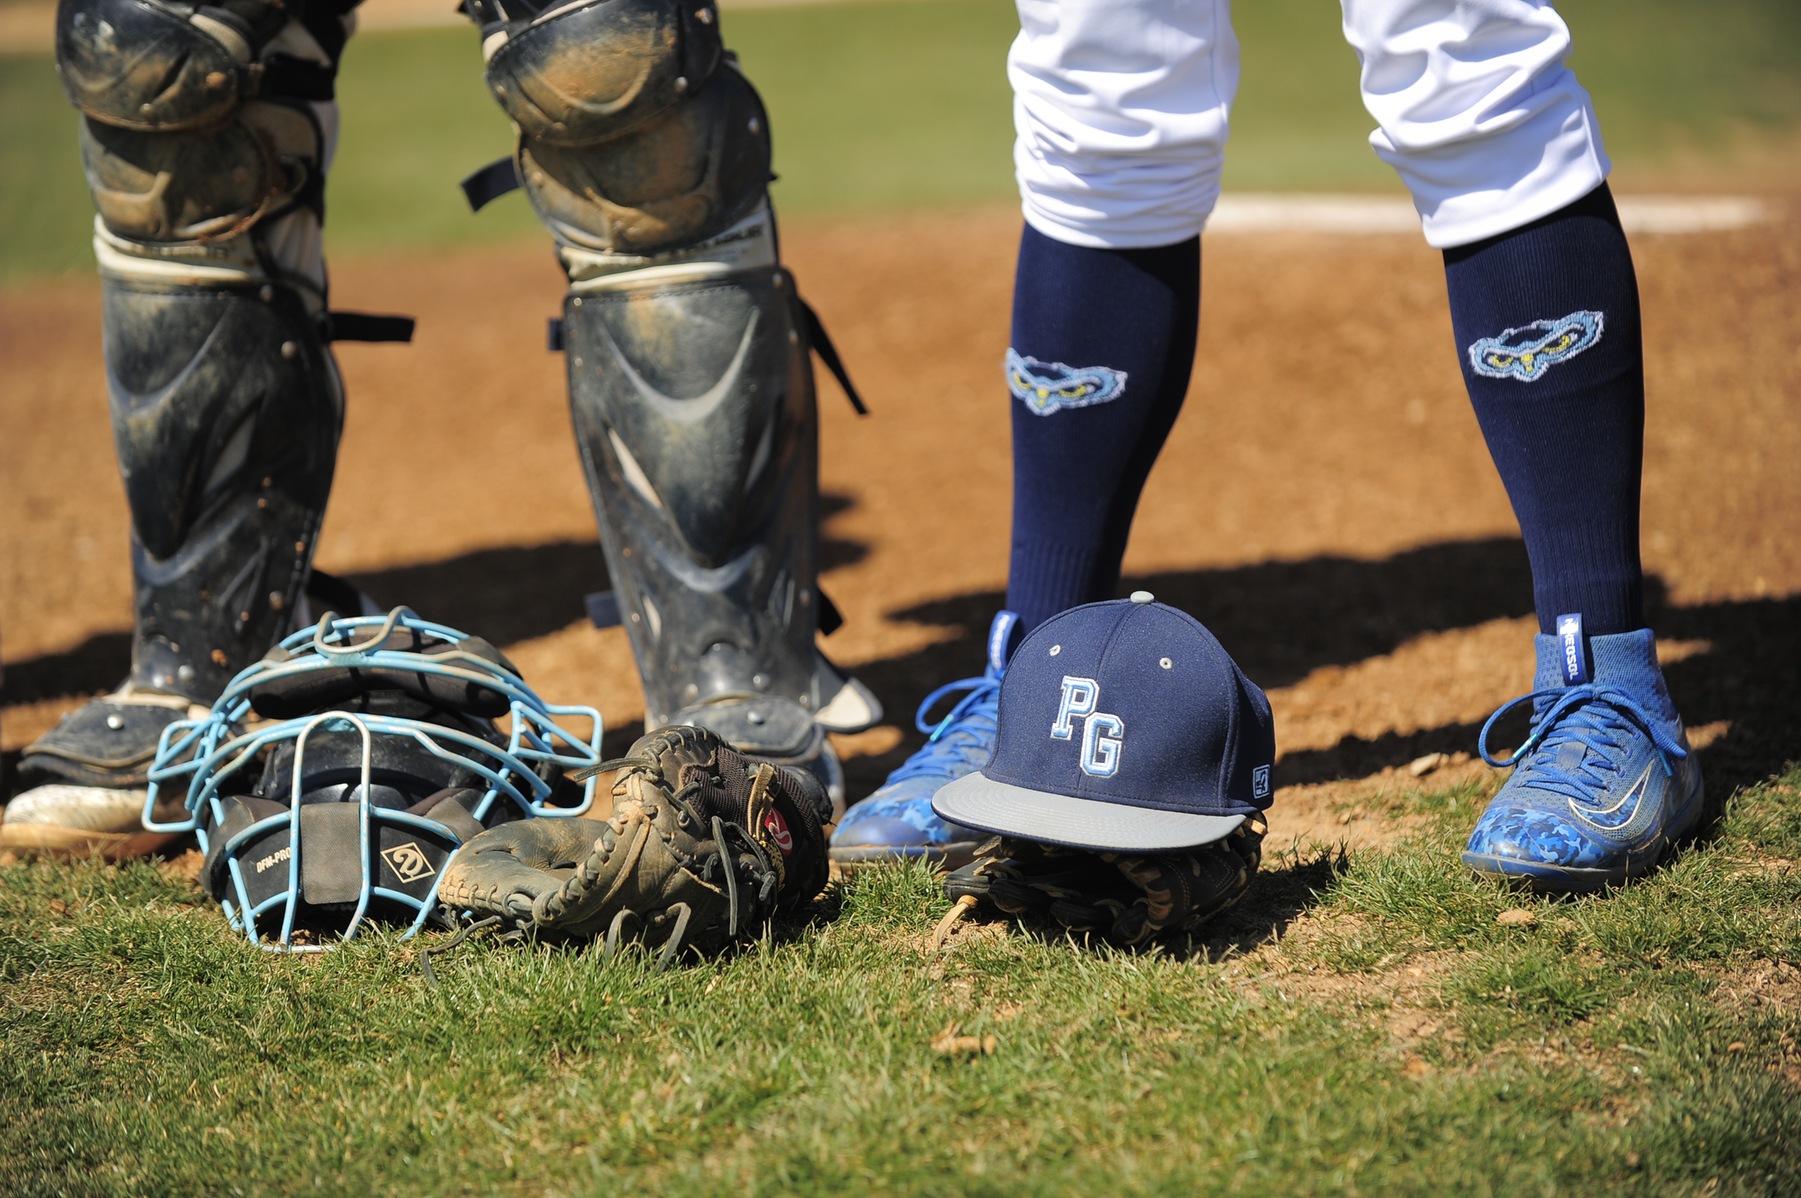 Prince George's Baseball Falls To No. 10 In NJCAA Division III Baseball Rankings